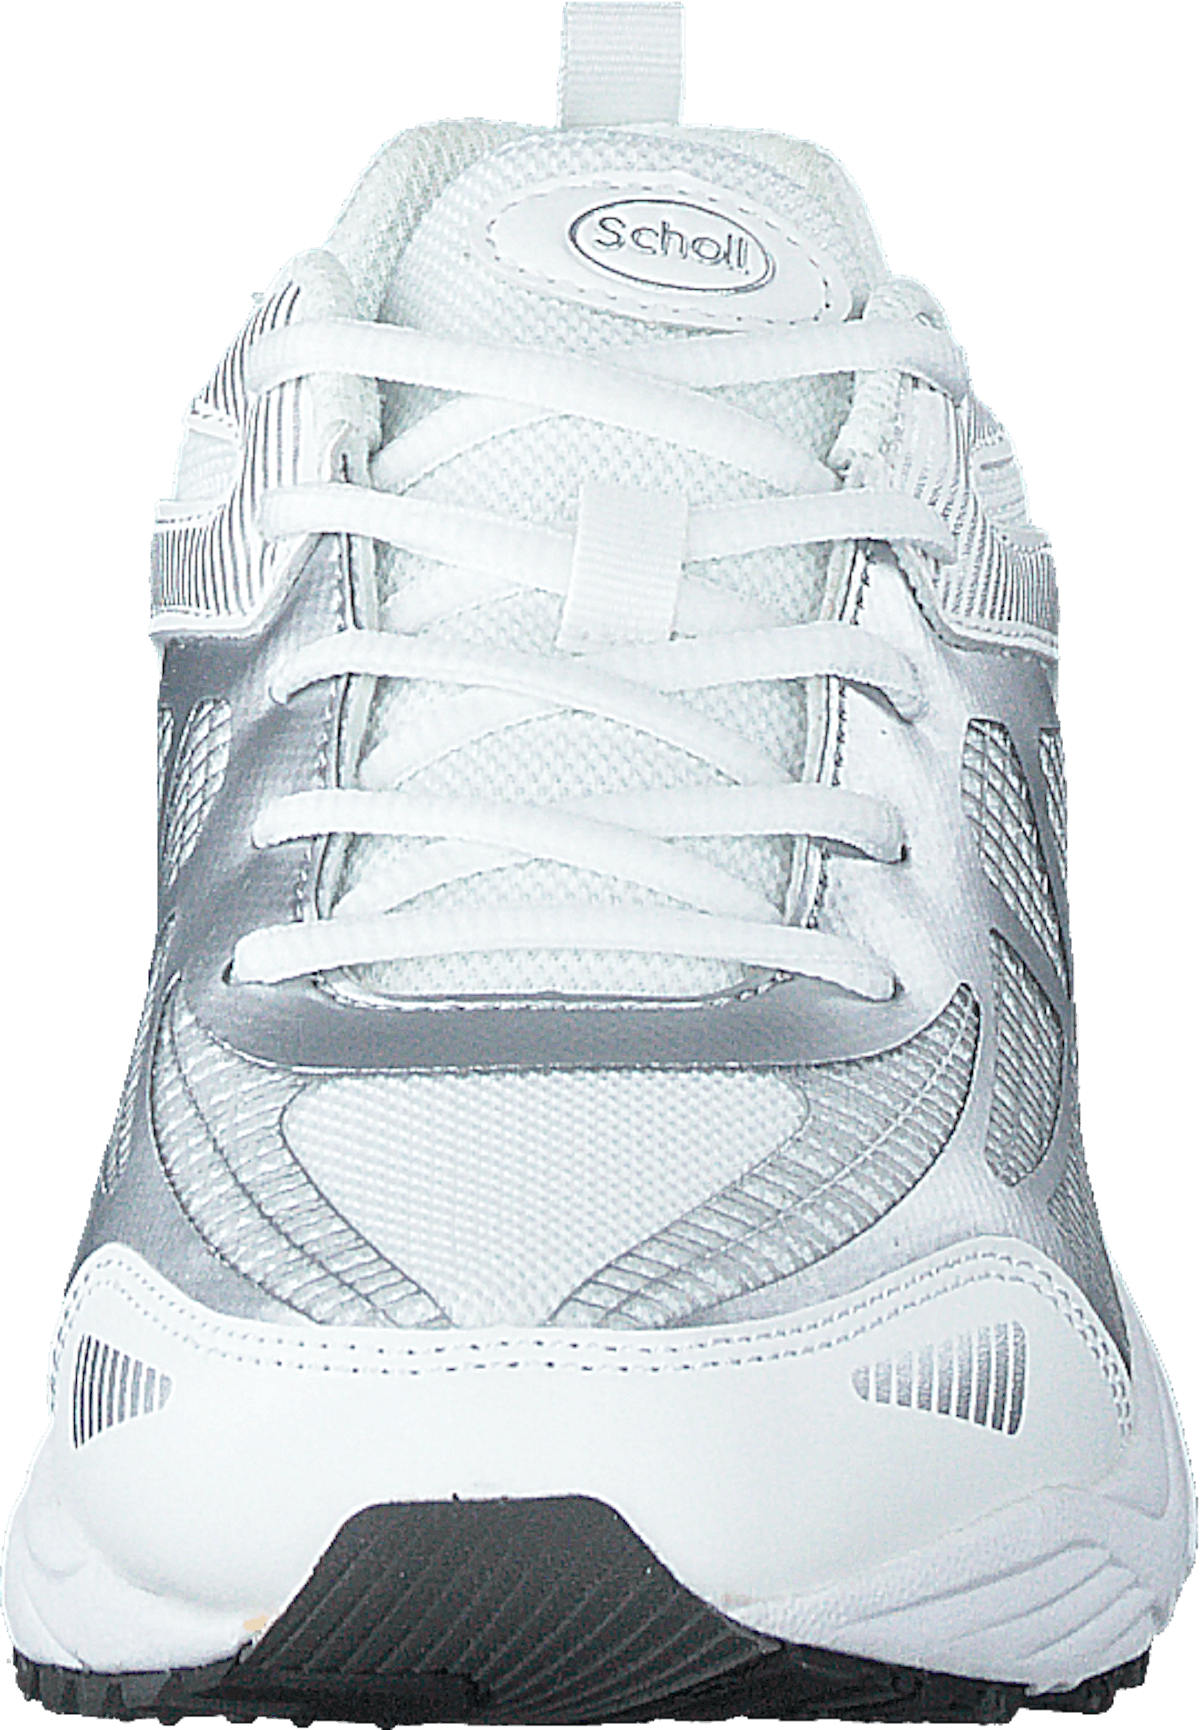 Sprinter Net White/silver